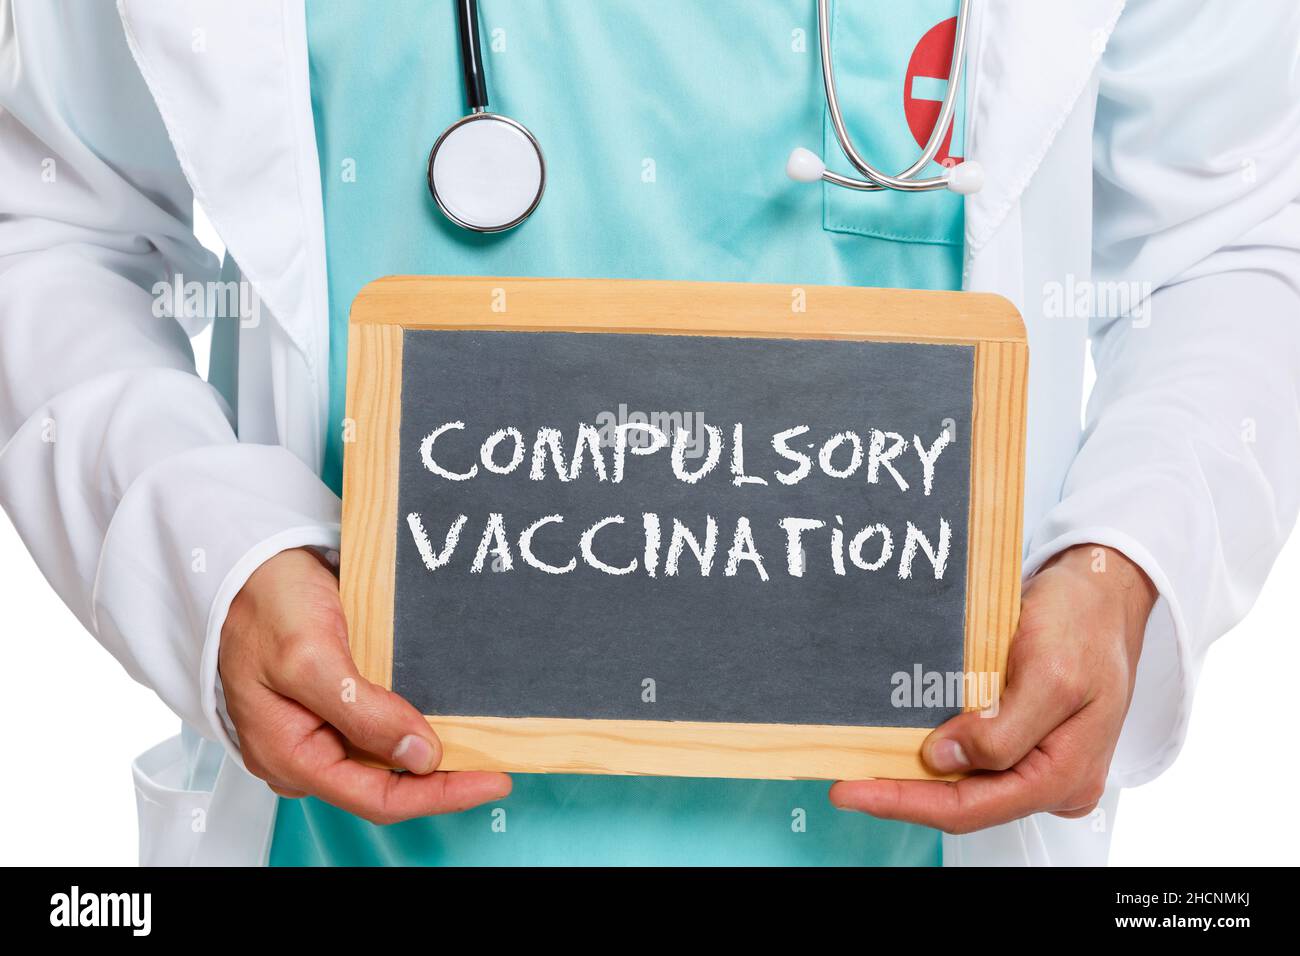 Compulsory vaccination against coronavirus vaccine hesitancy corona virus COVID-19 Covid doctor slate illness Stock Photo